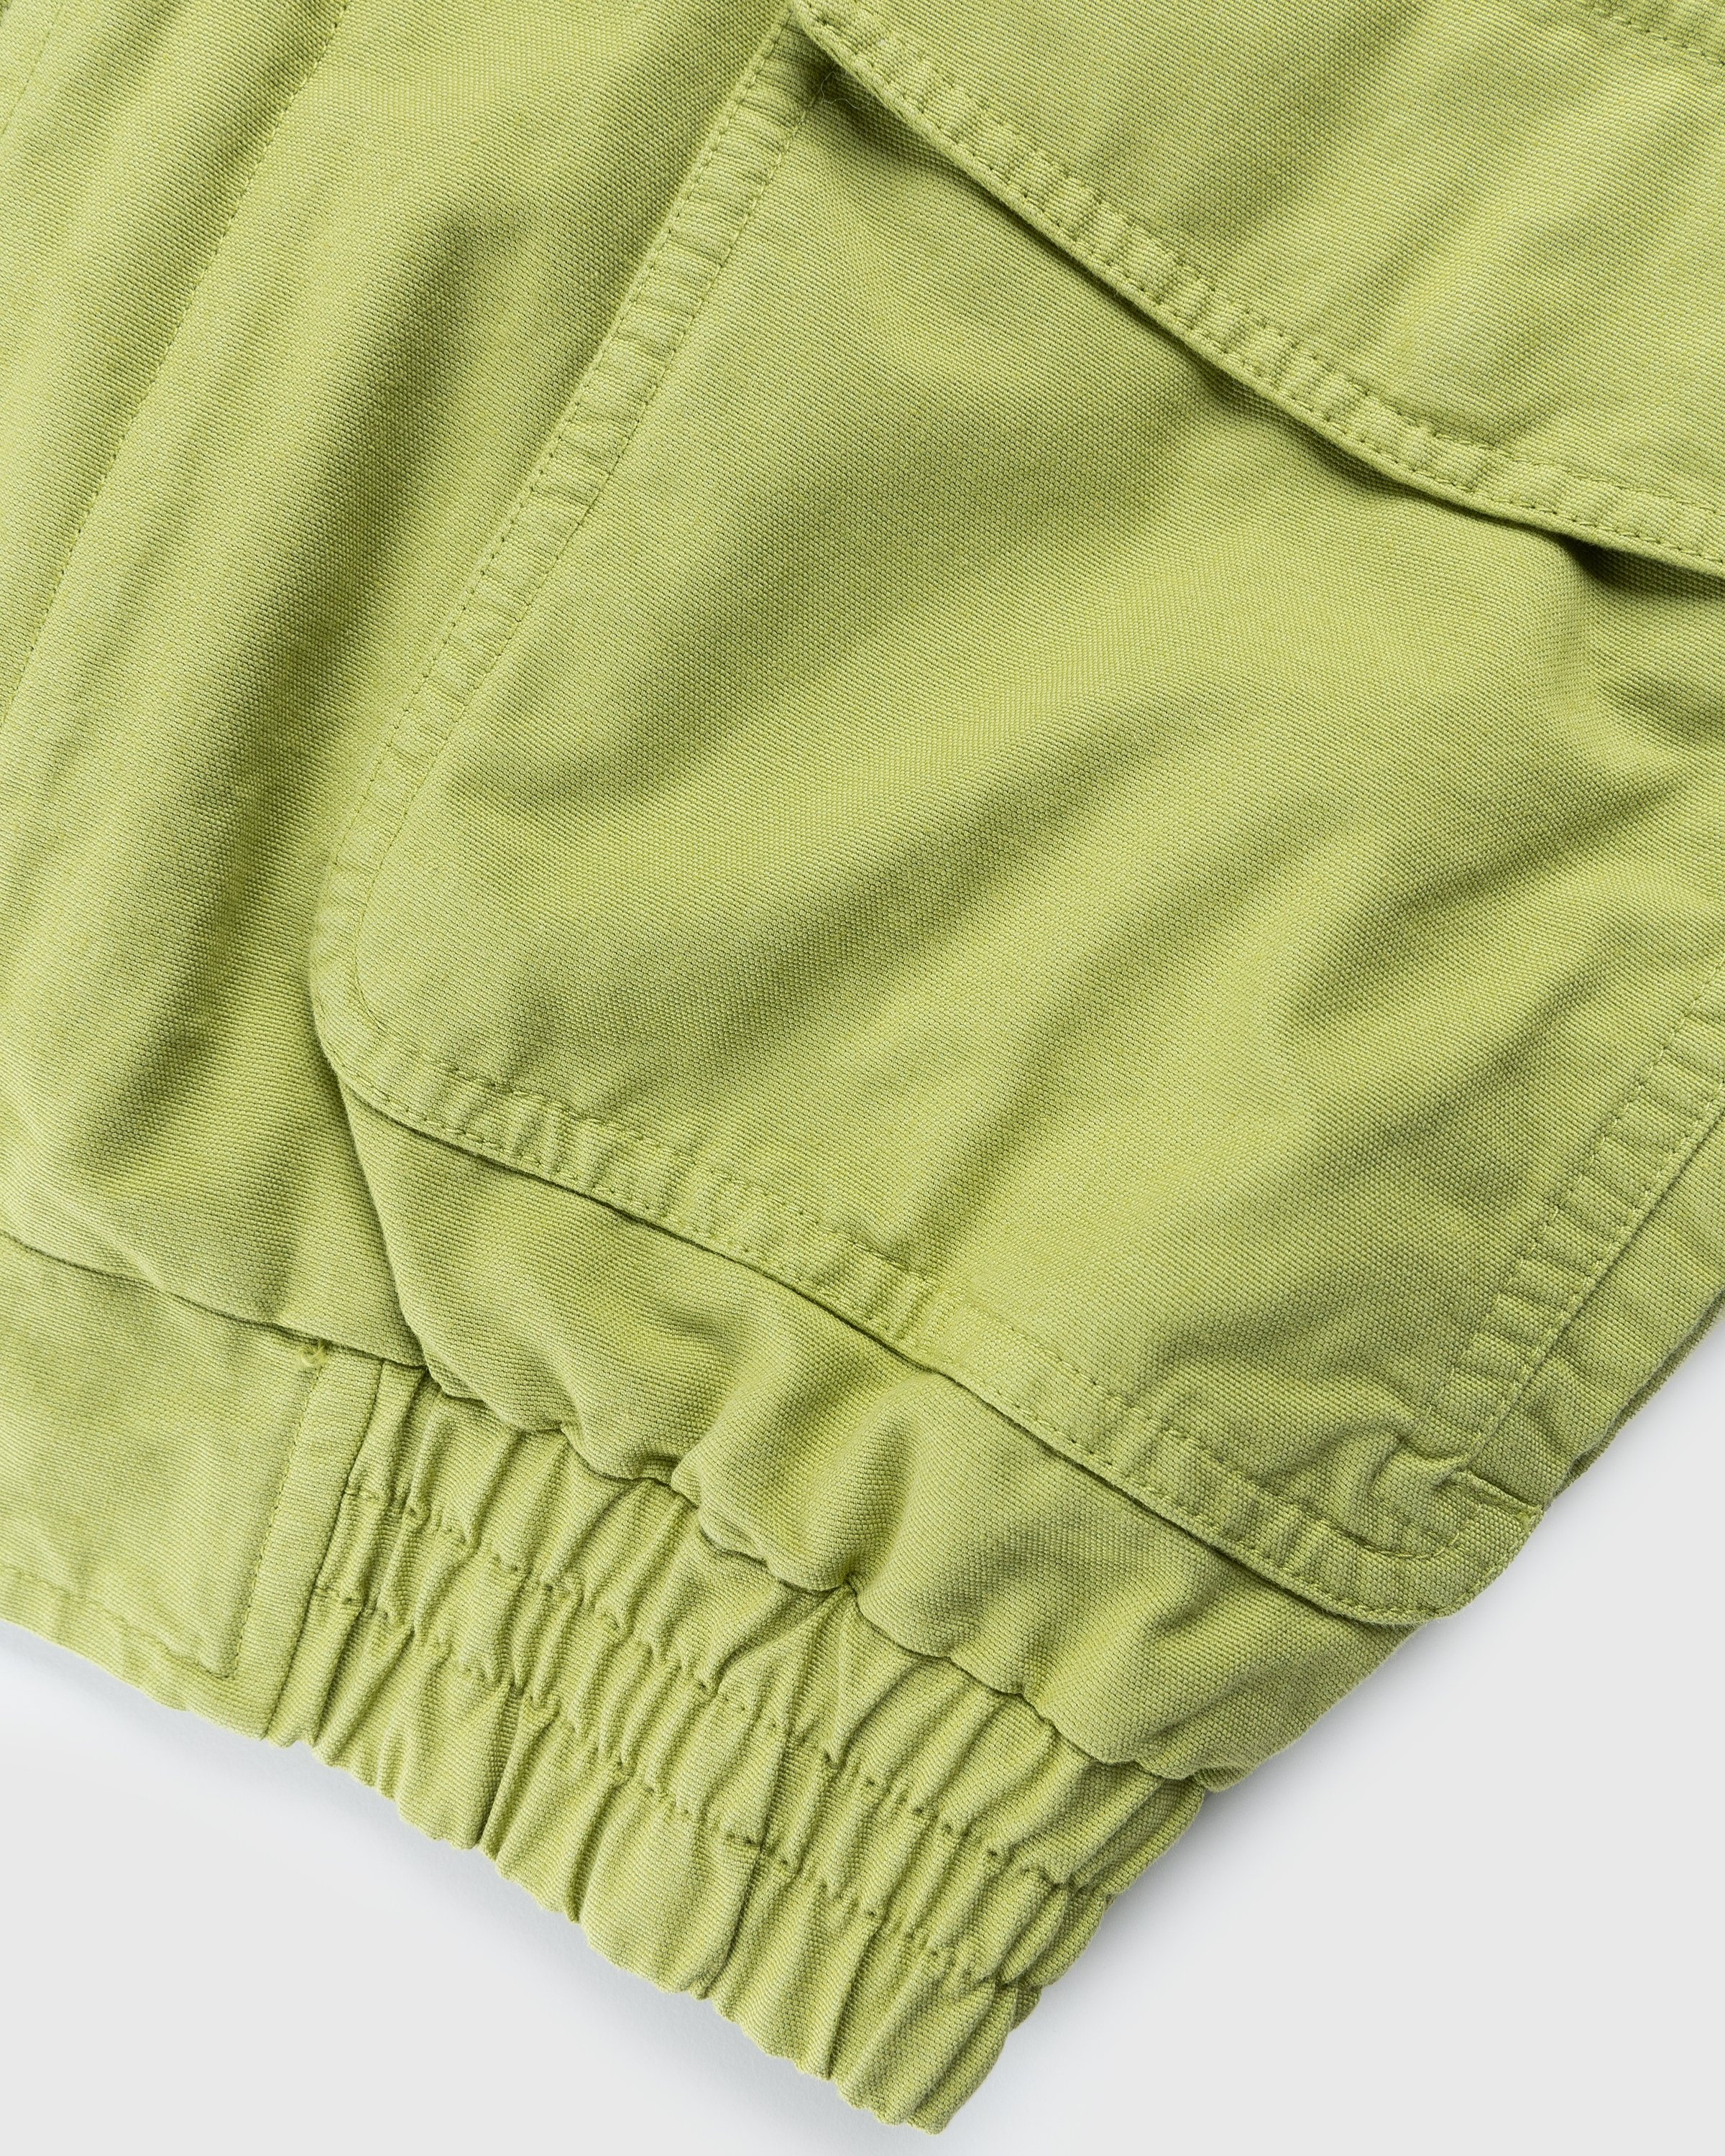 Winnie New York – Double Pocket Cotton Jacket Green - Outerwear - Green - Image 6